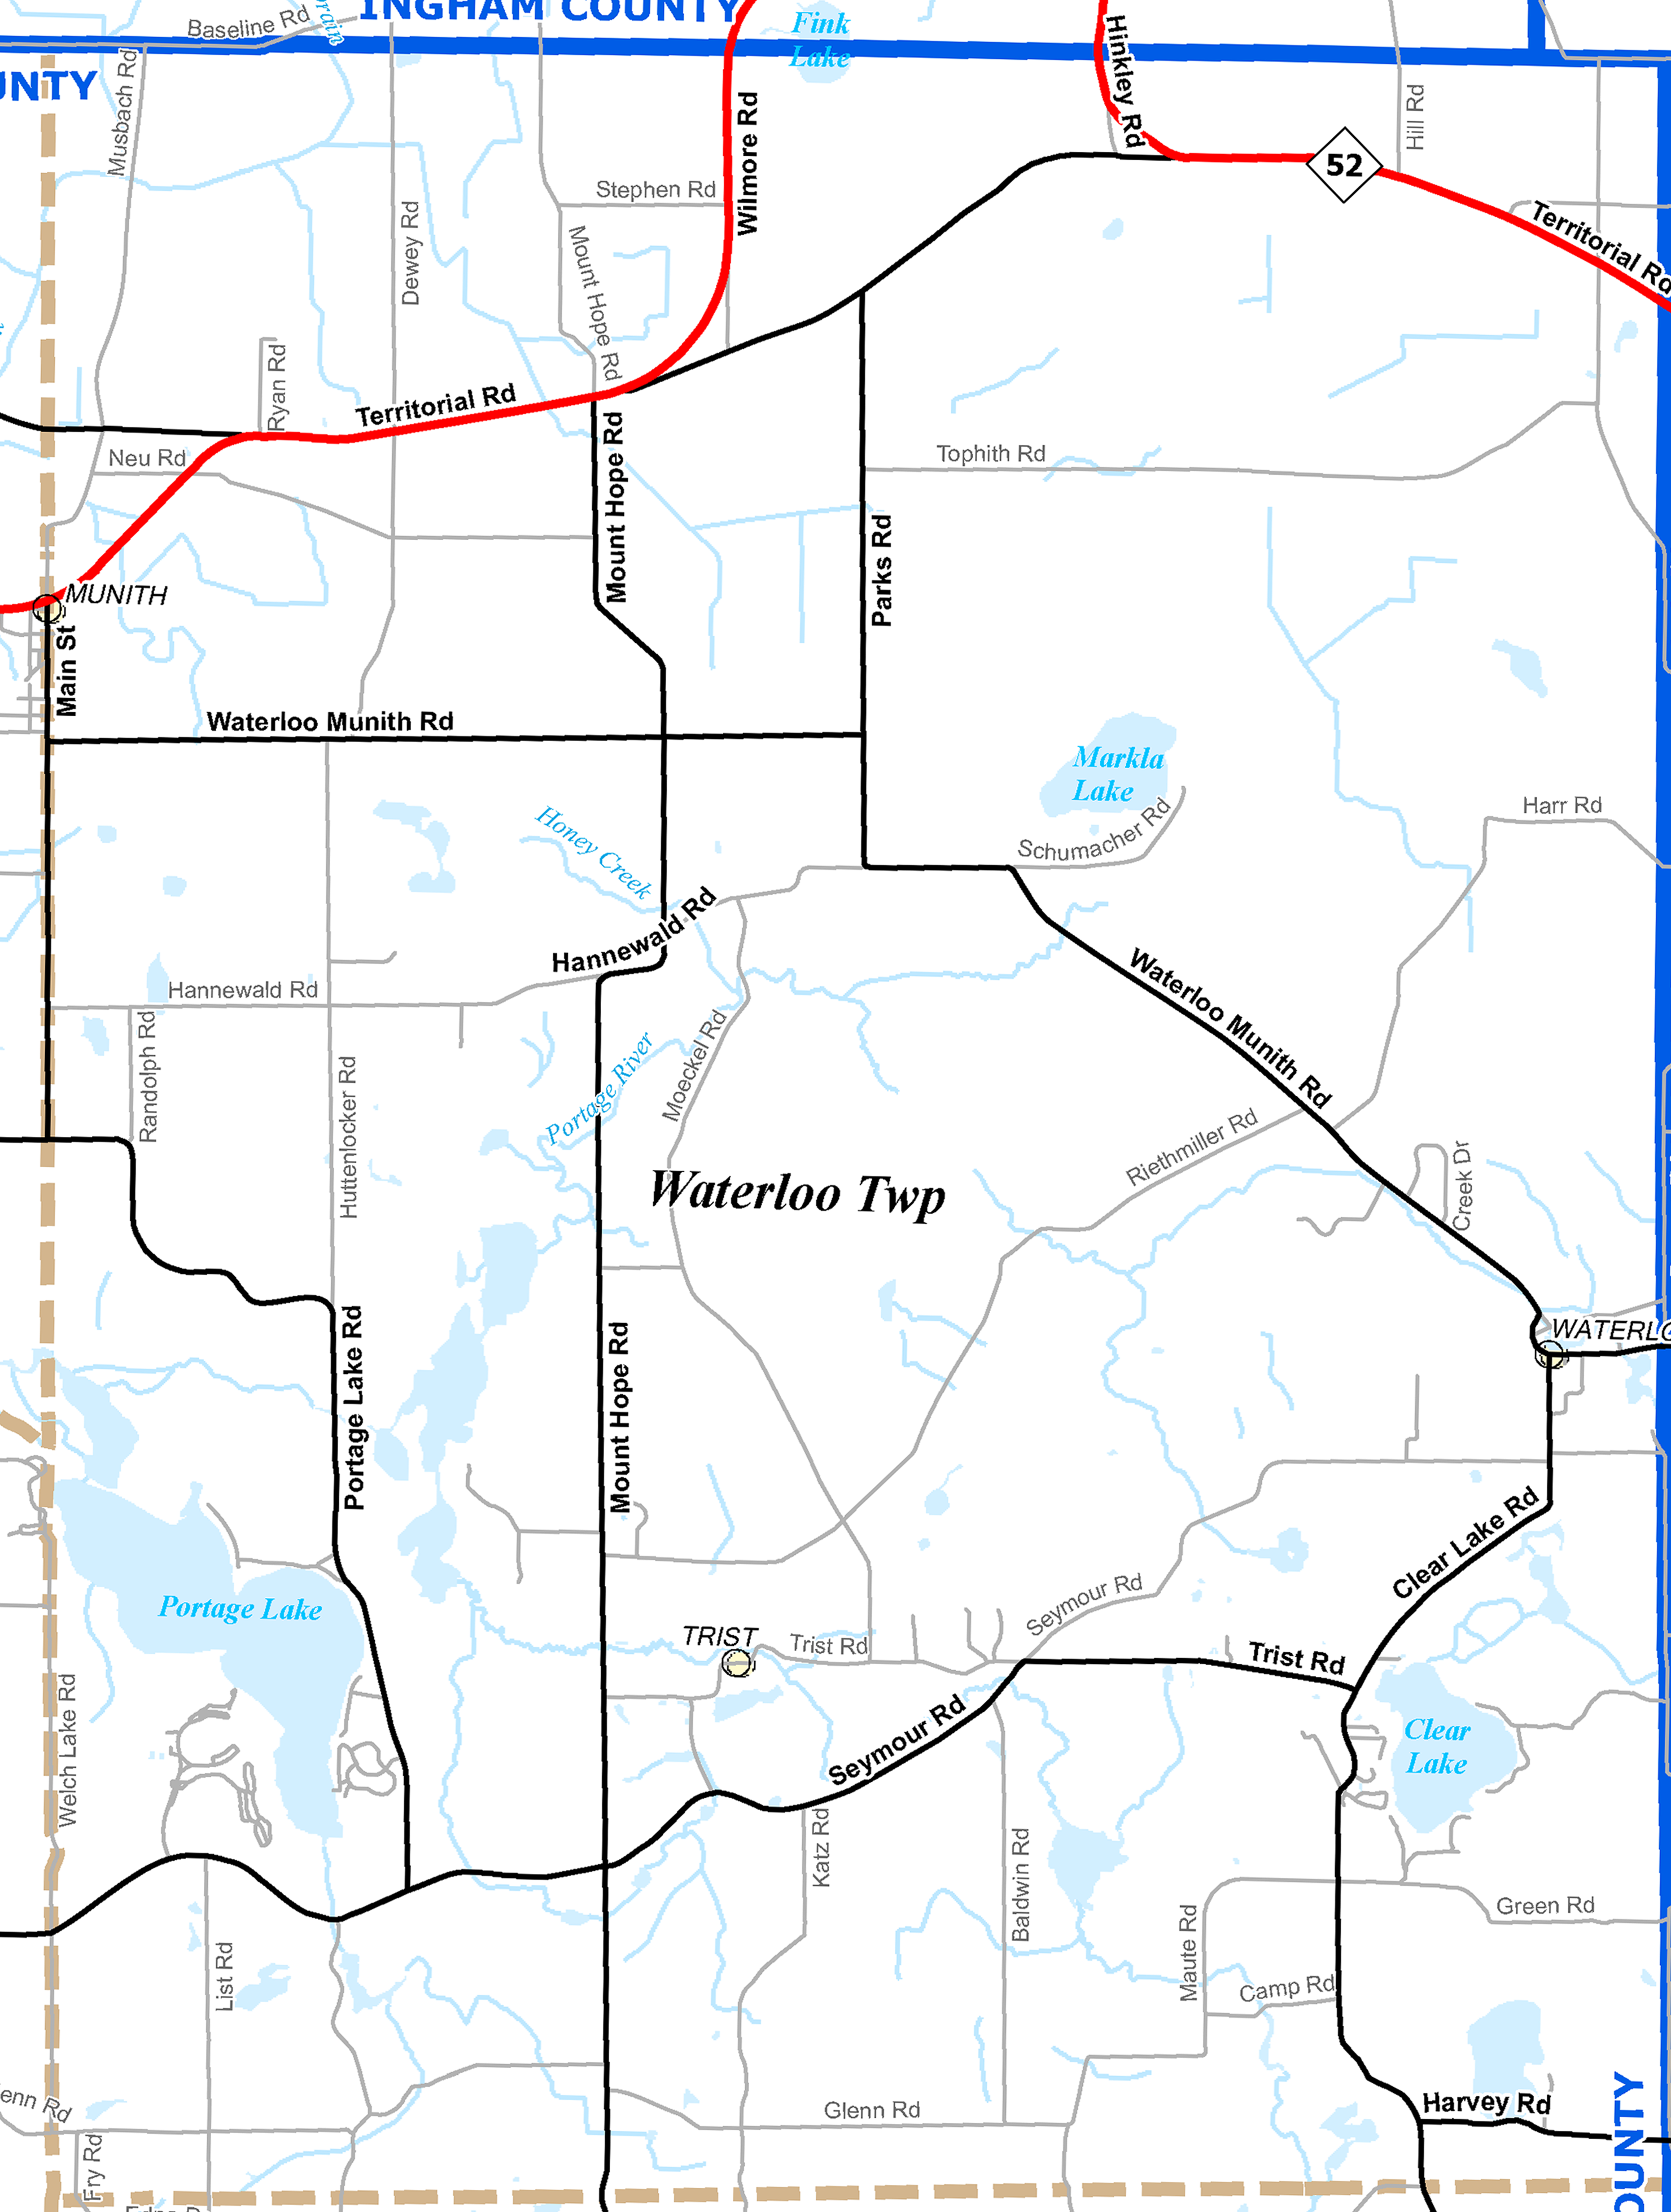 2009 Waterloo Township, Michigan map